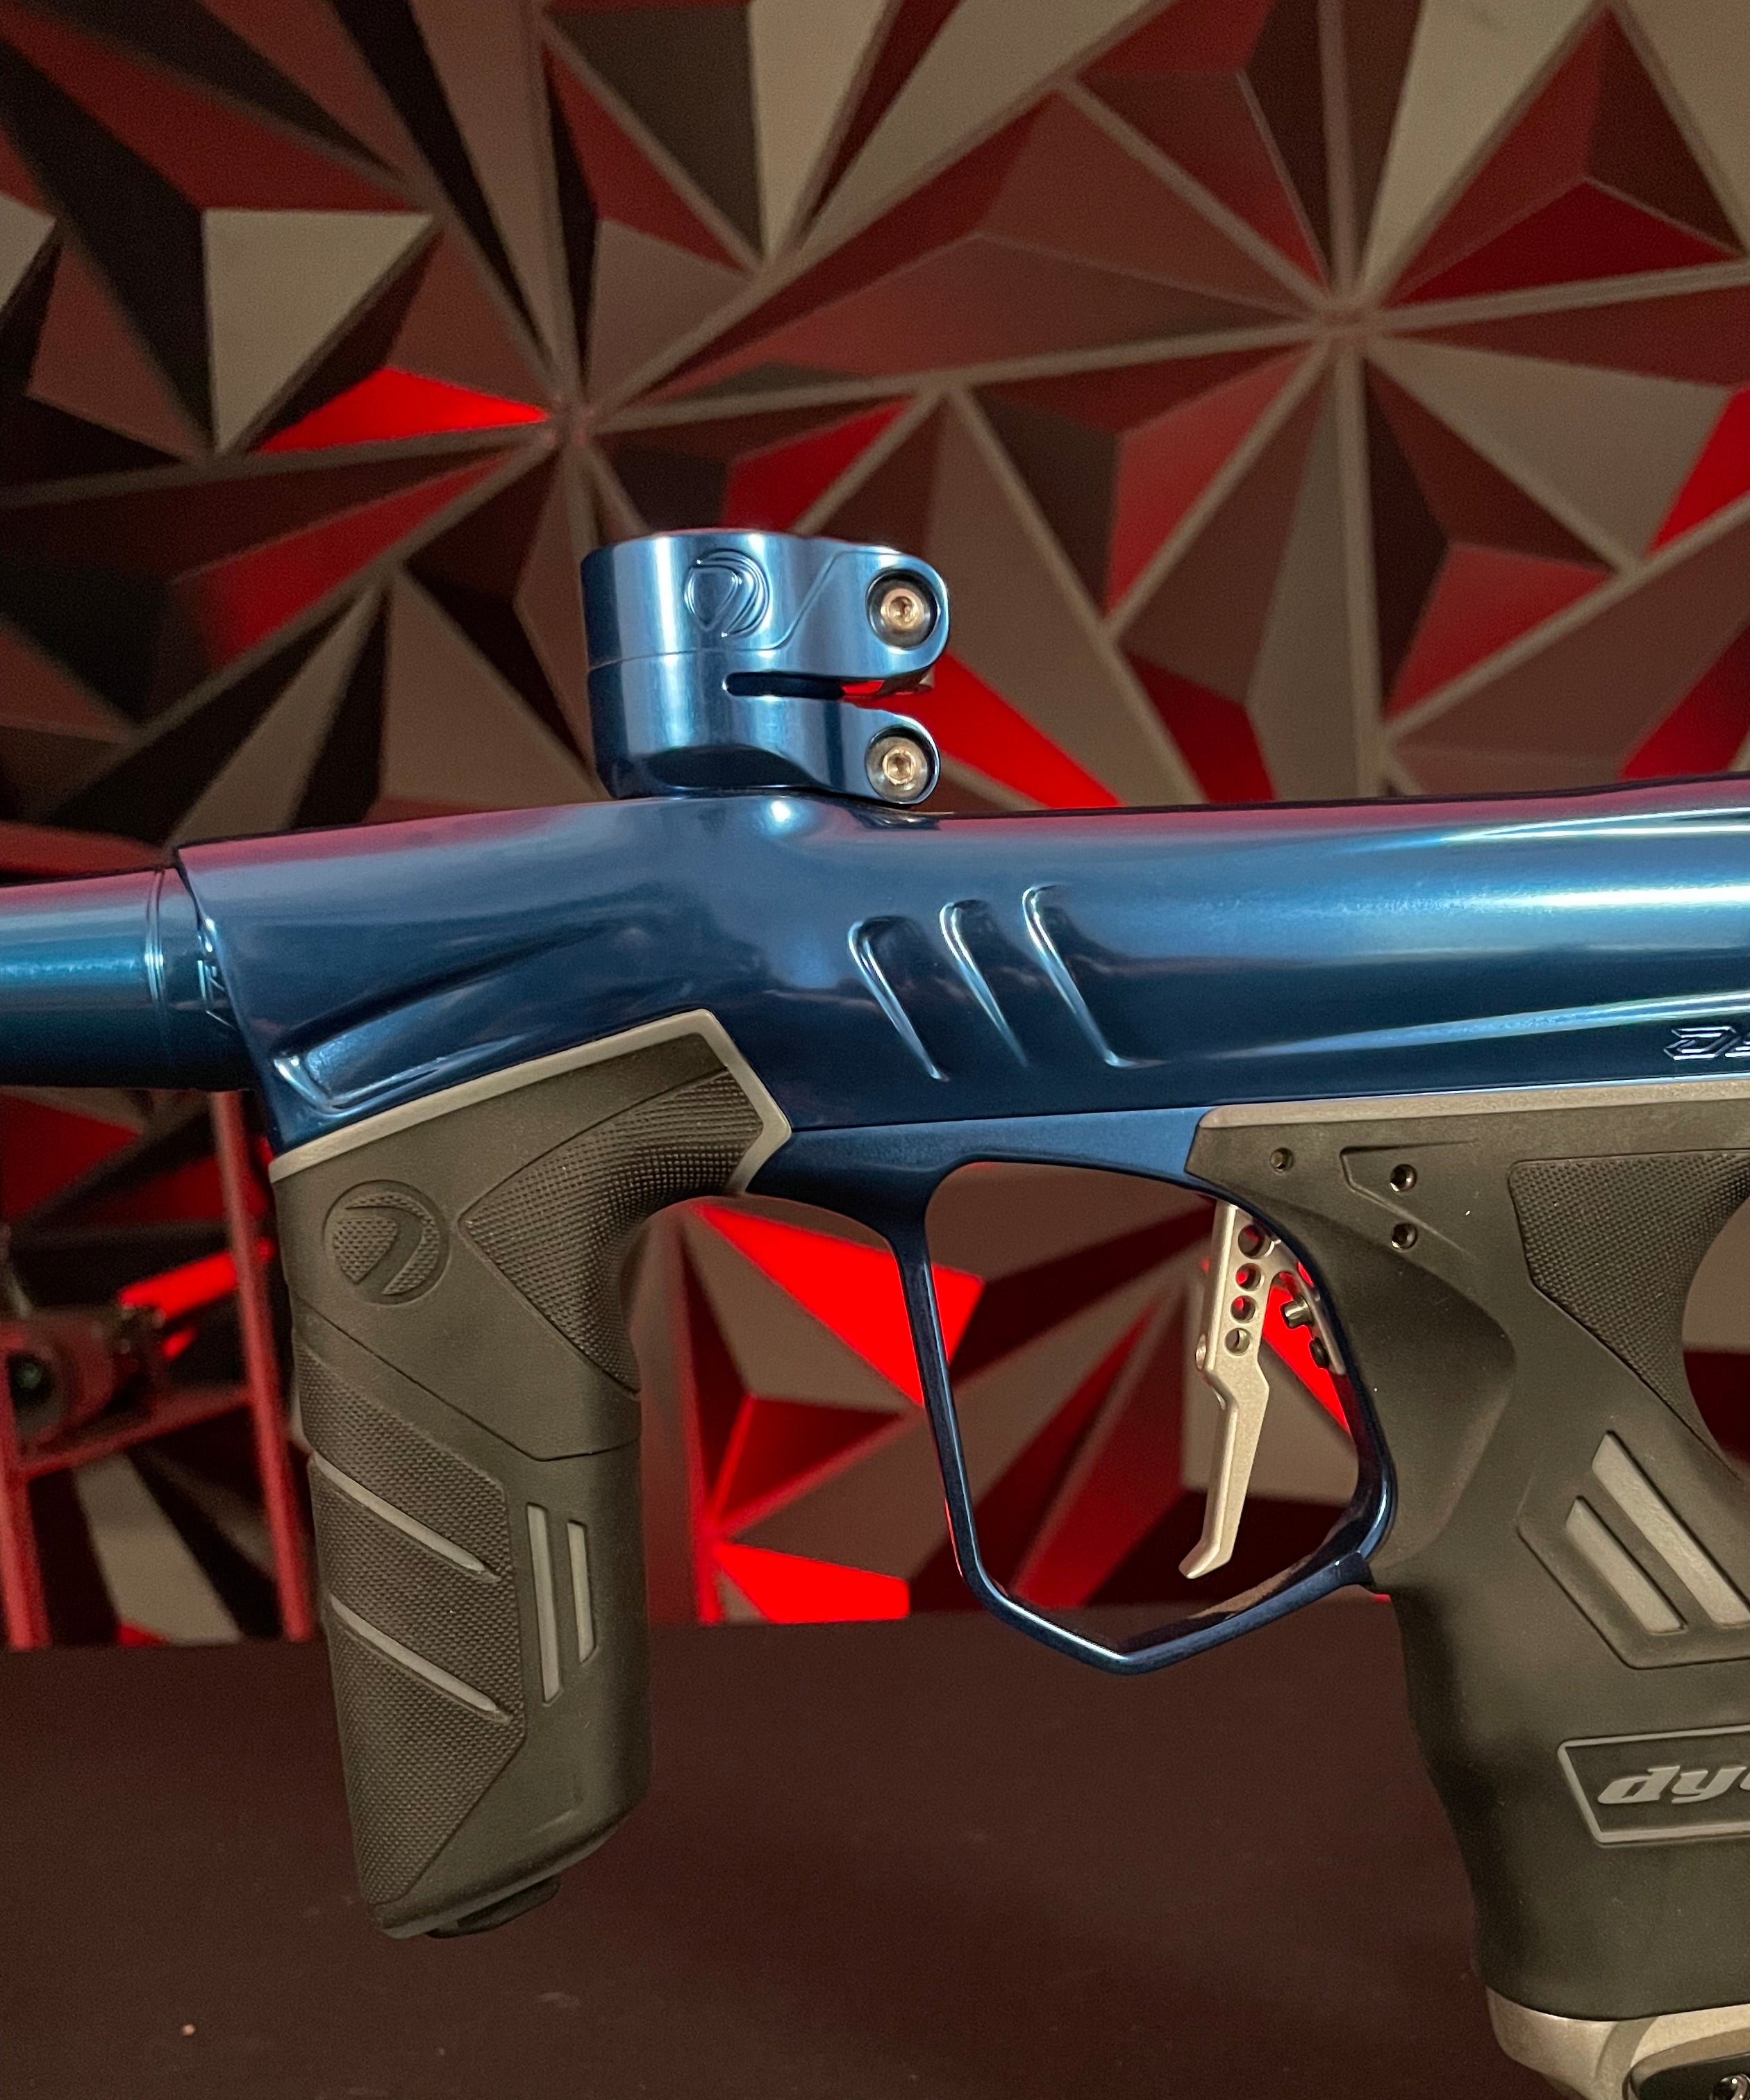 Used Dye DSR+ Paintball Gun - Polished Blue/Polished Silver (Deep Blue)